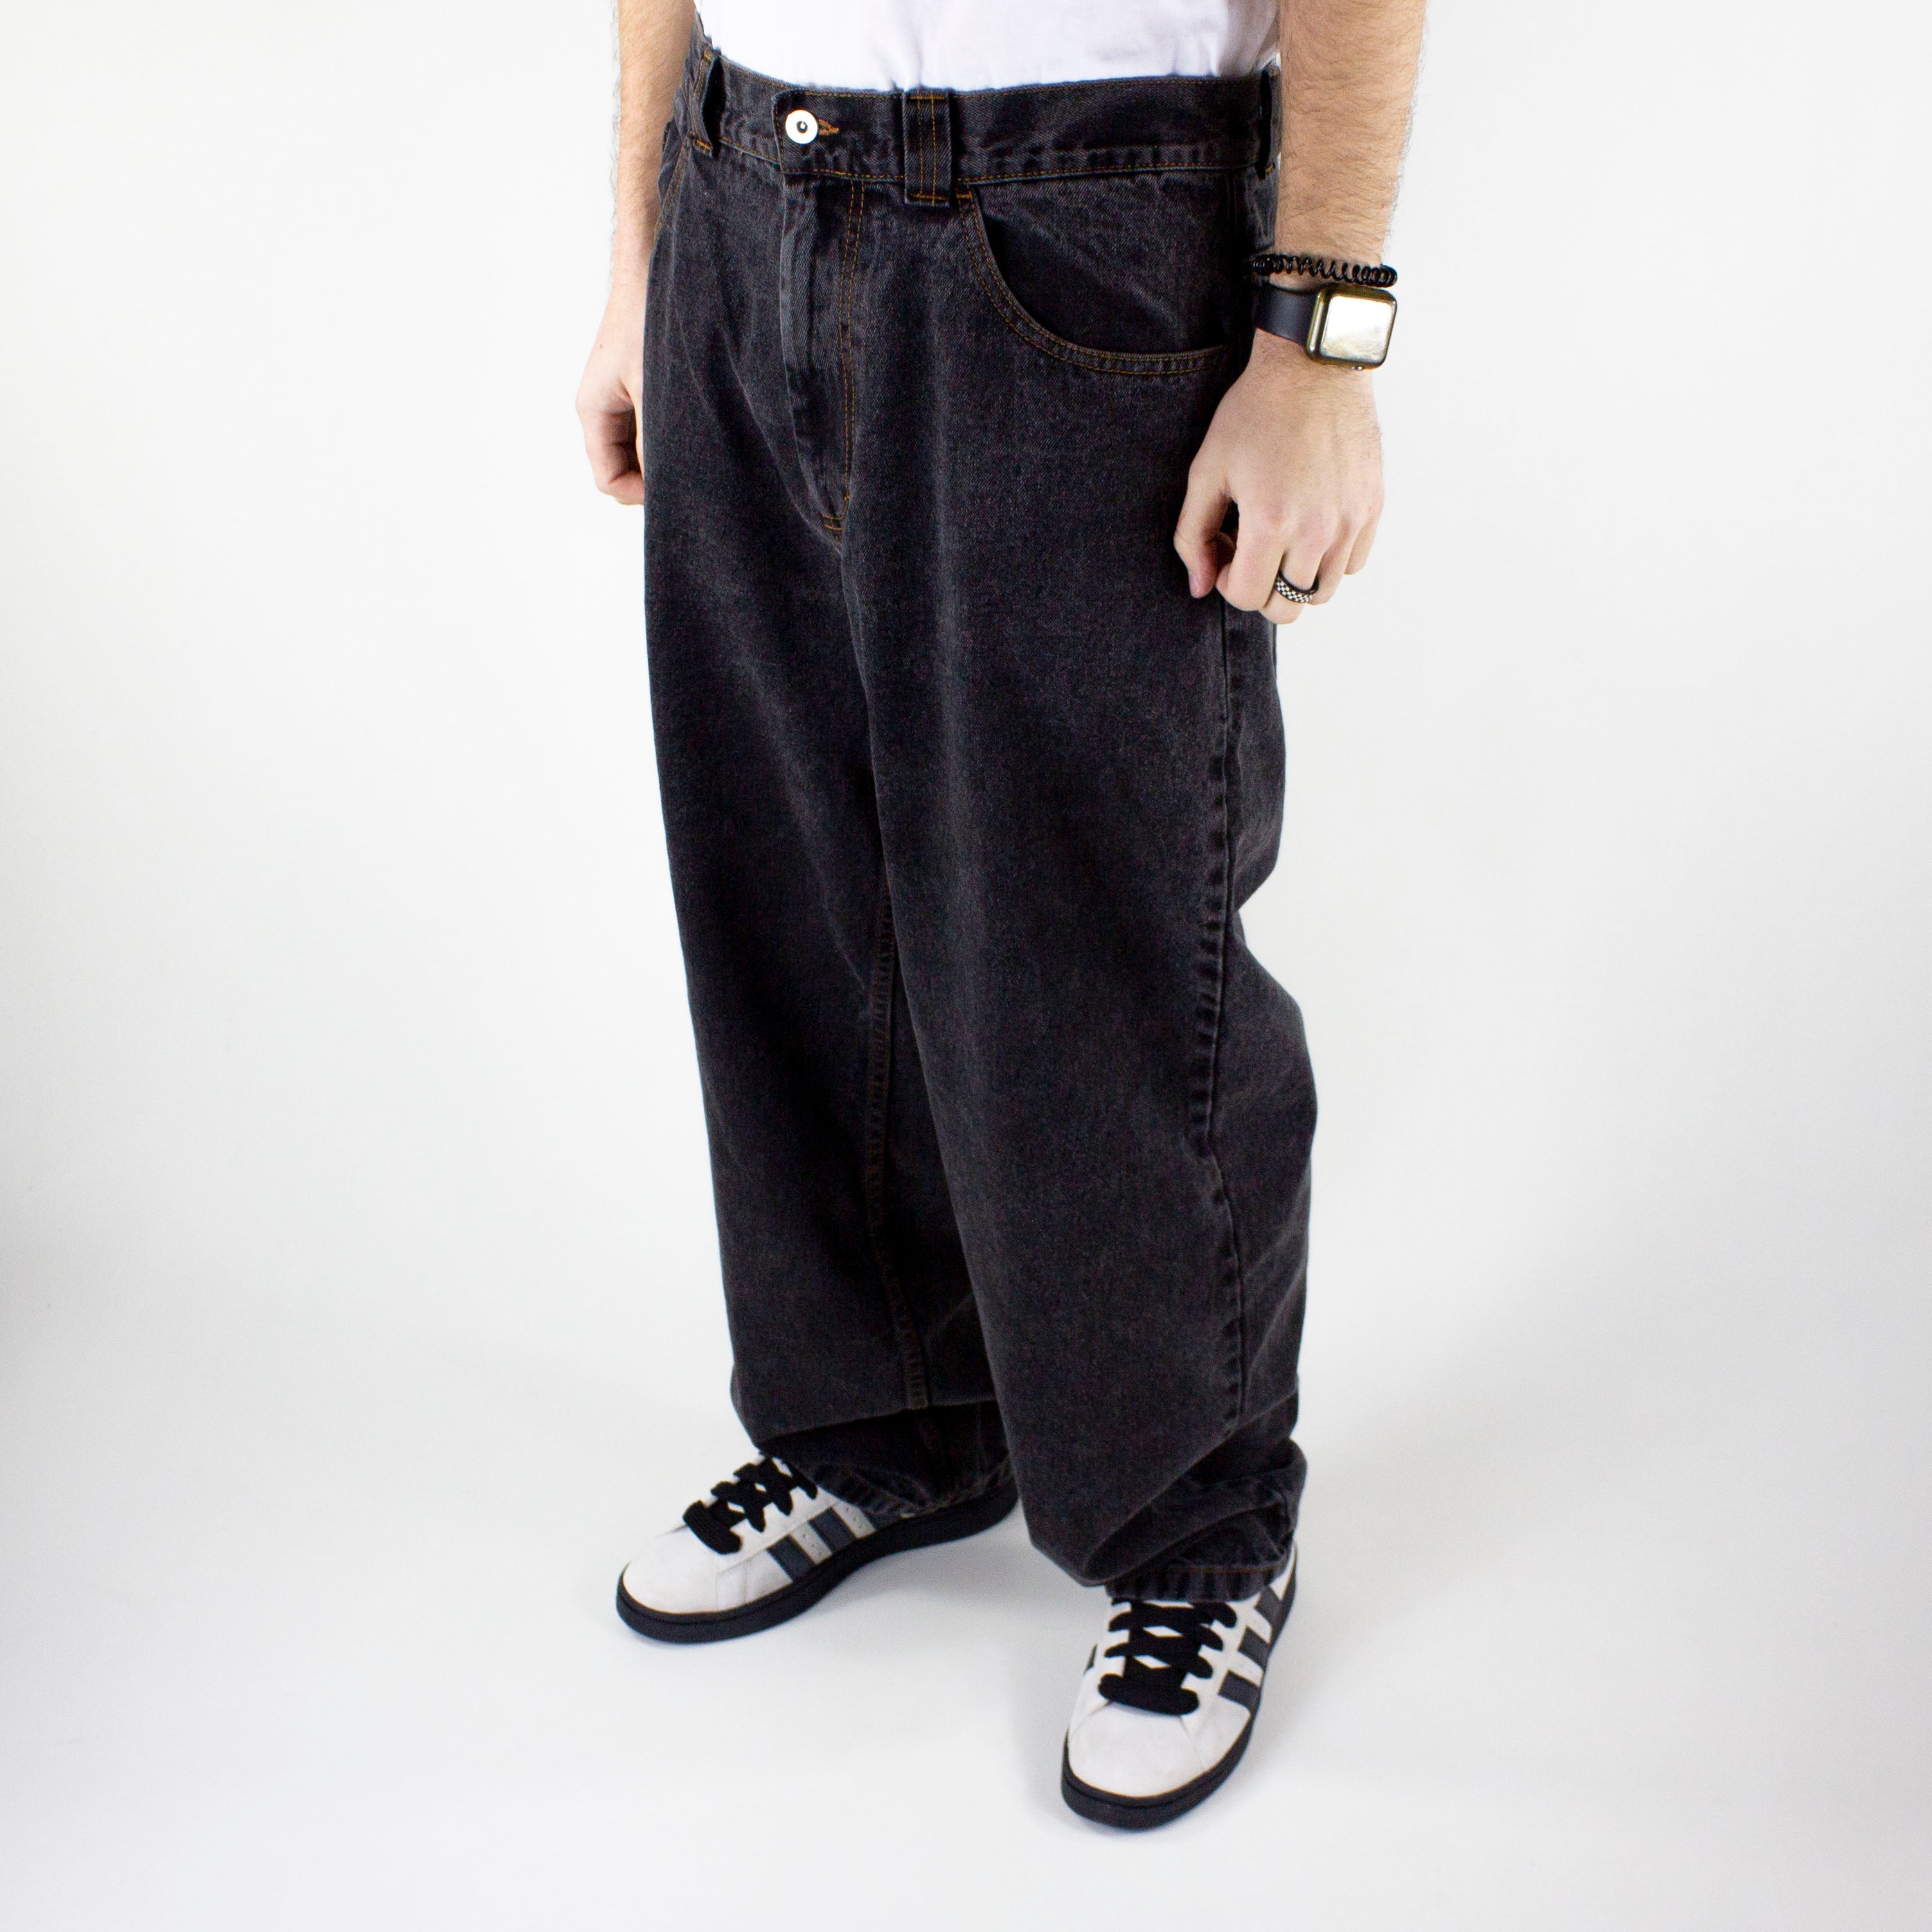 Polar Skate Co. Big Boy Jeans Pants - Washed Black